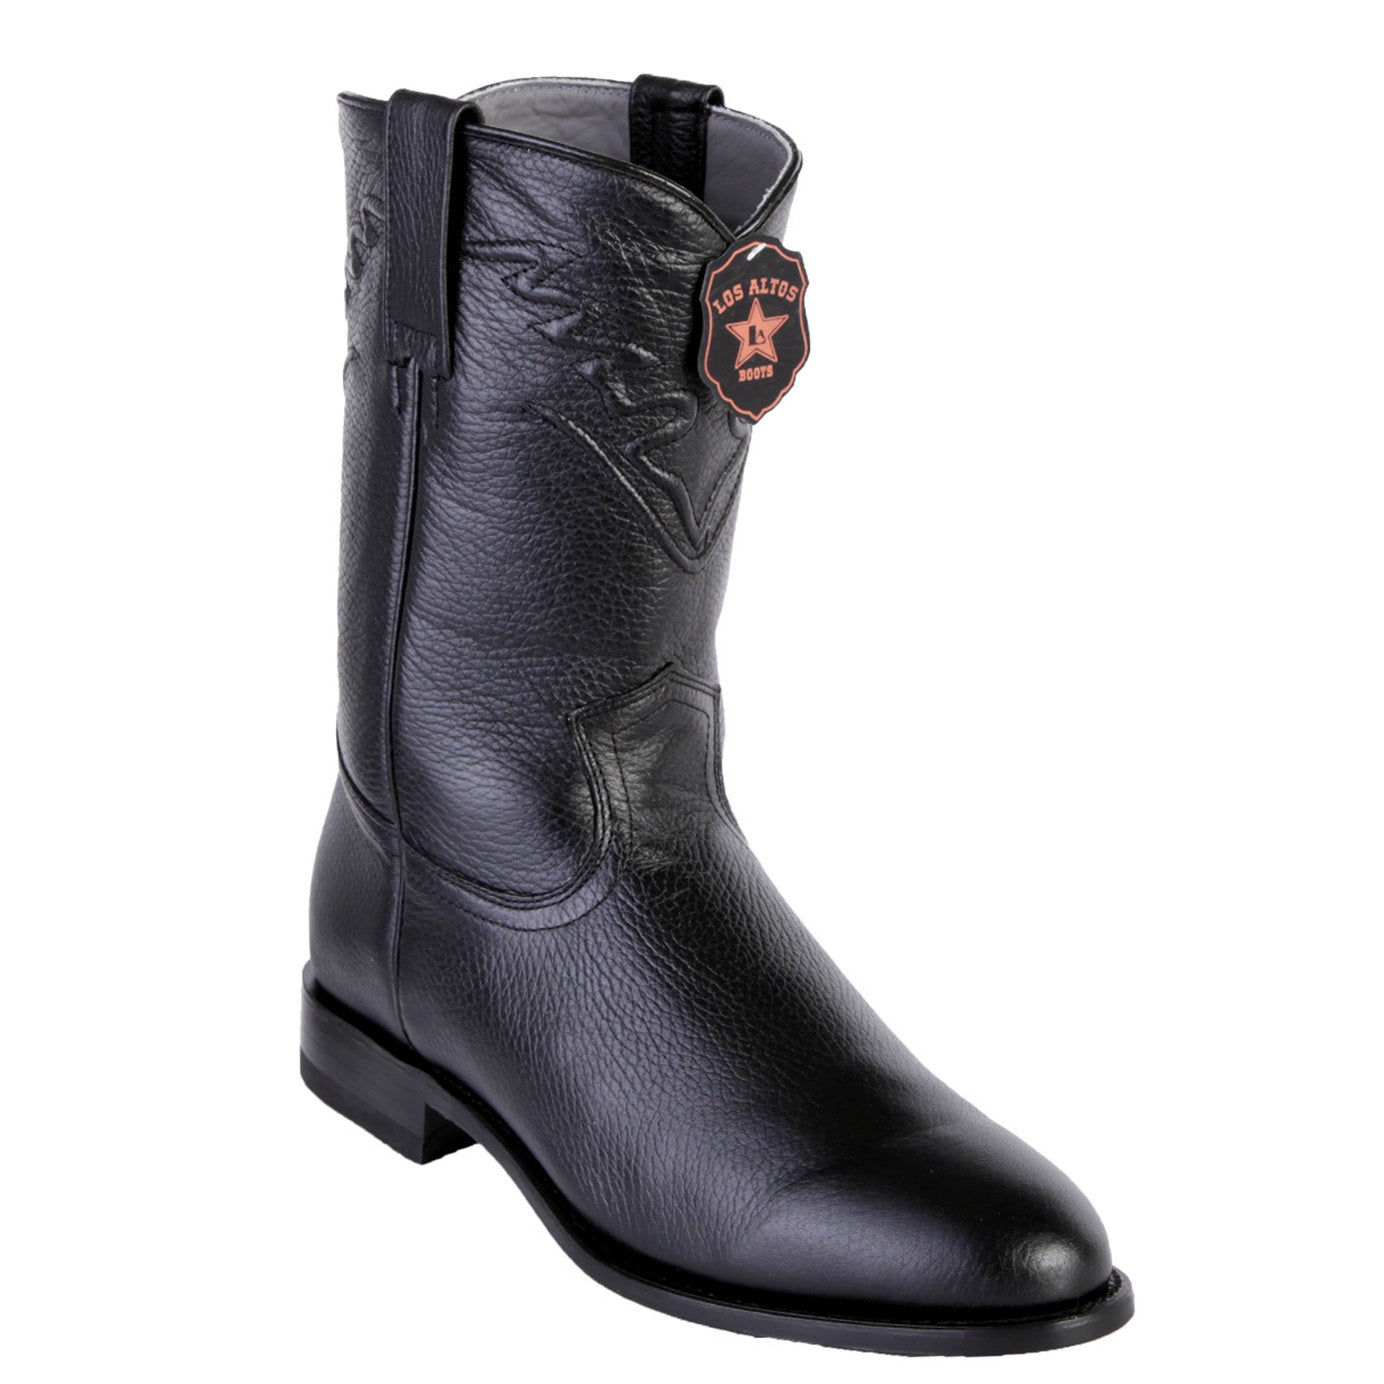 Black roper boots for men